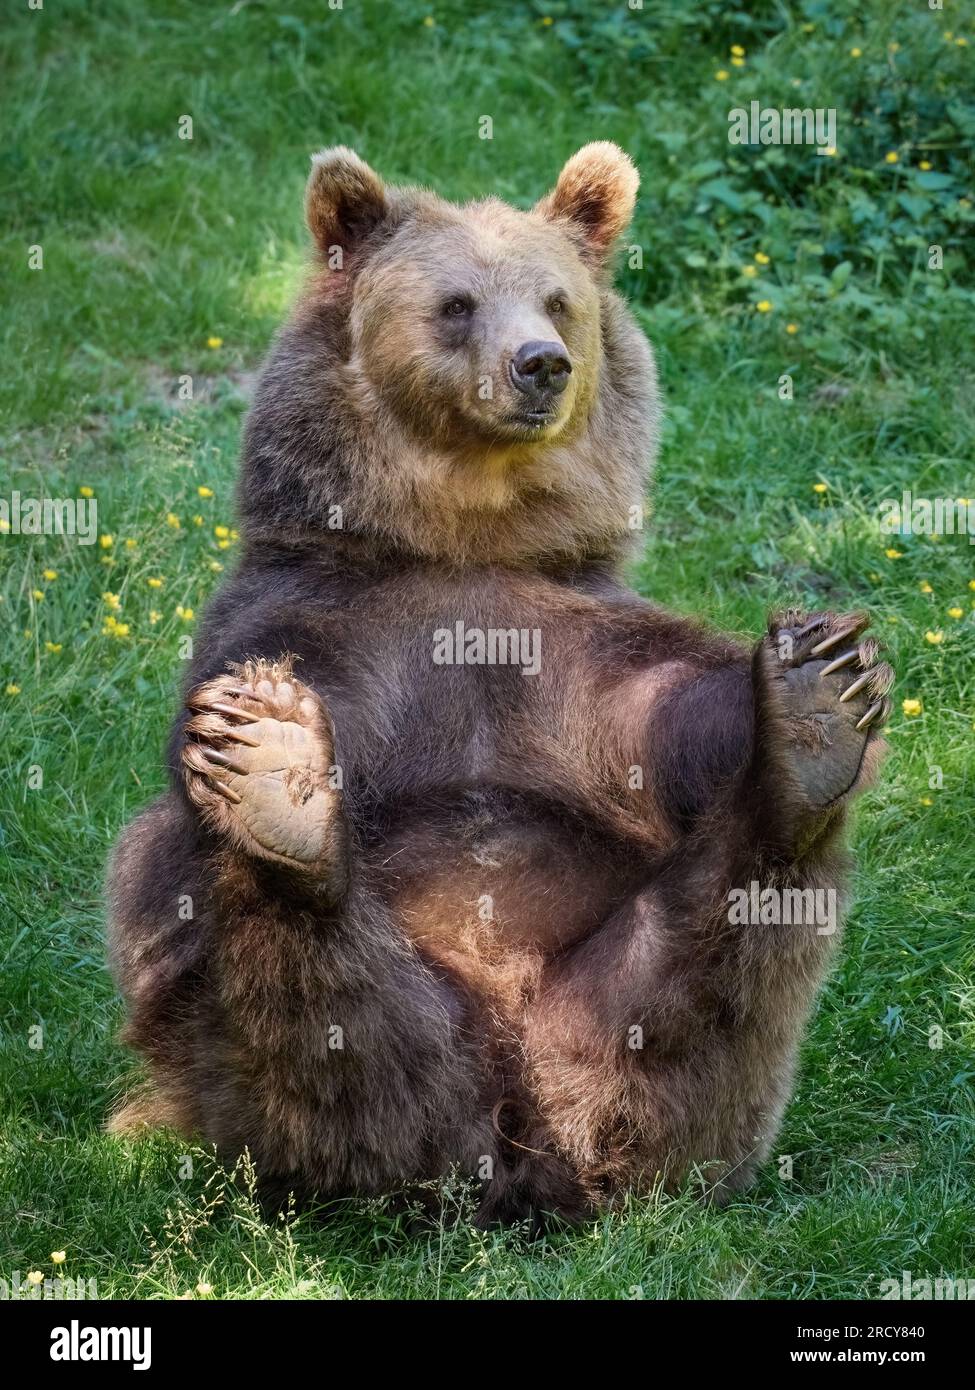 Brown bear (Ursus arctos) in its natural environment Stock Photo